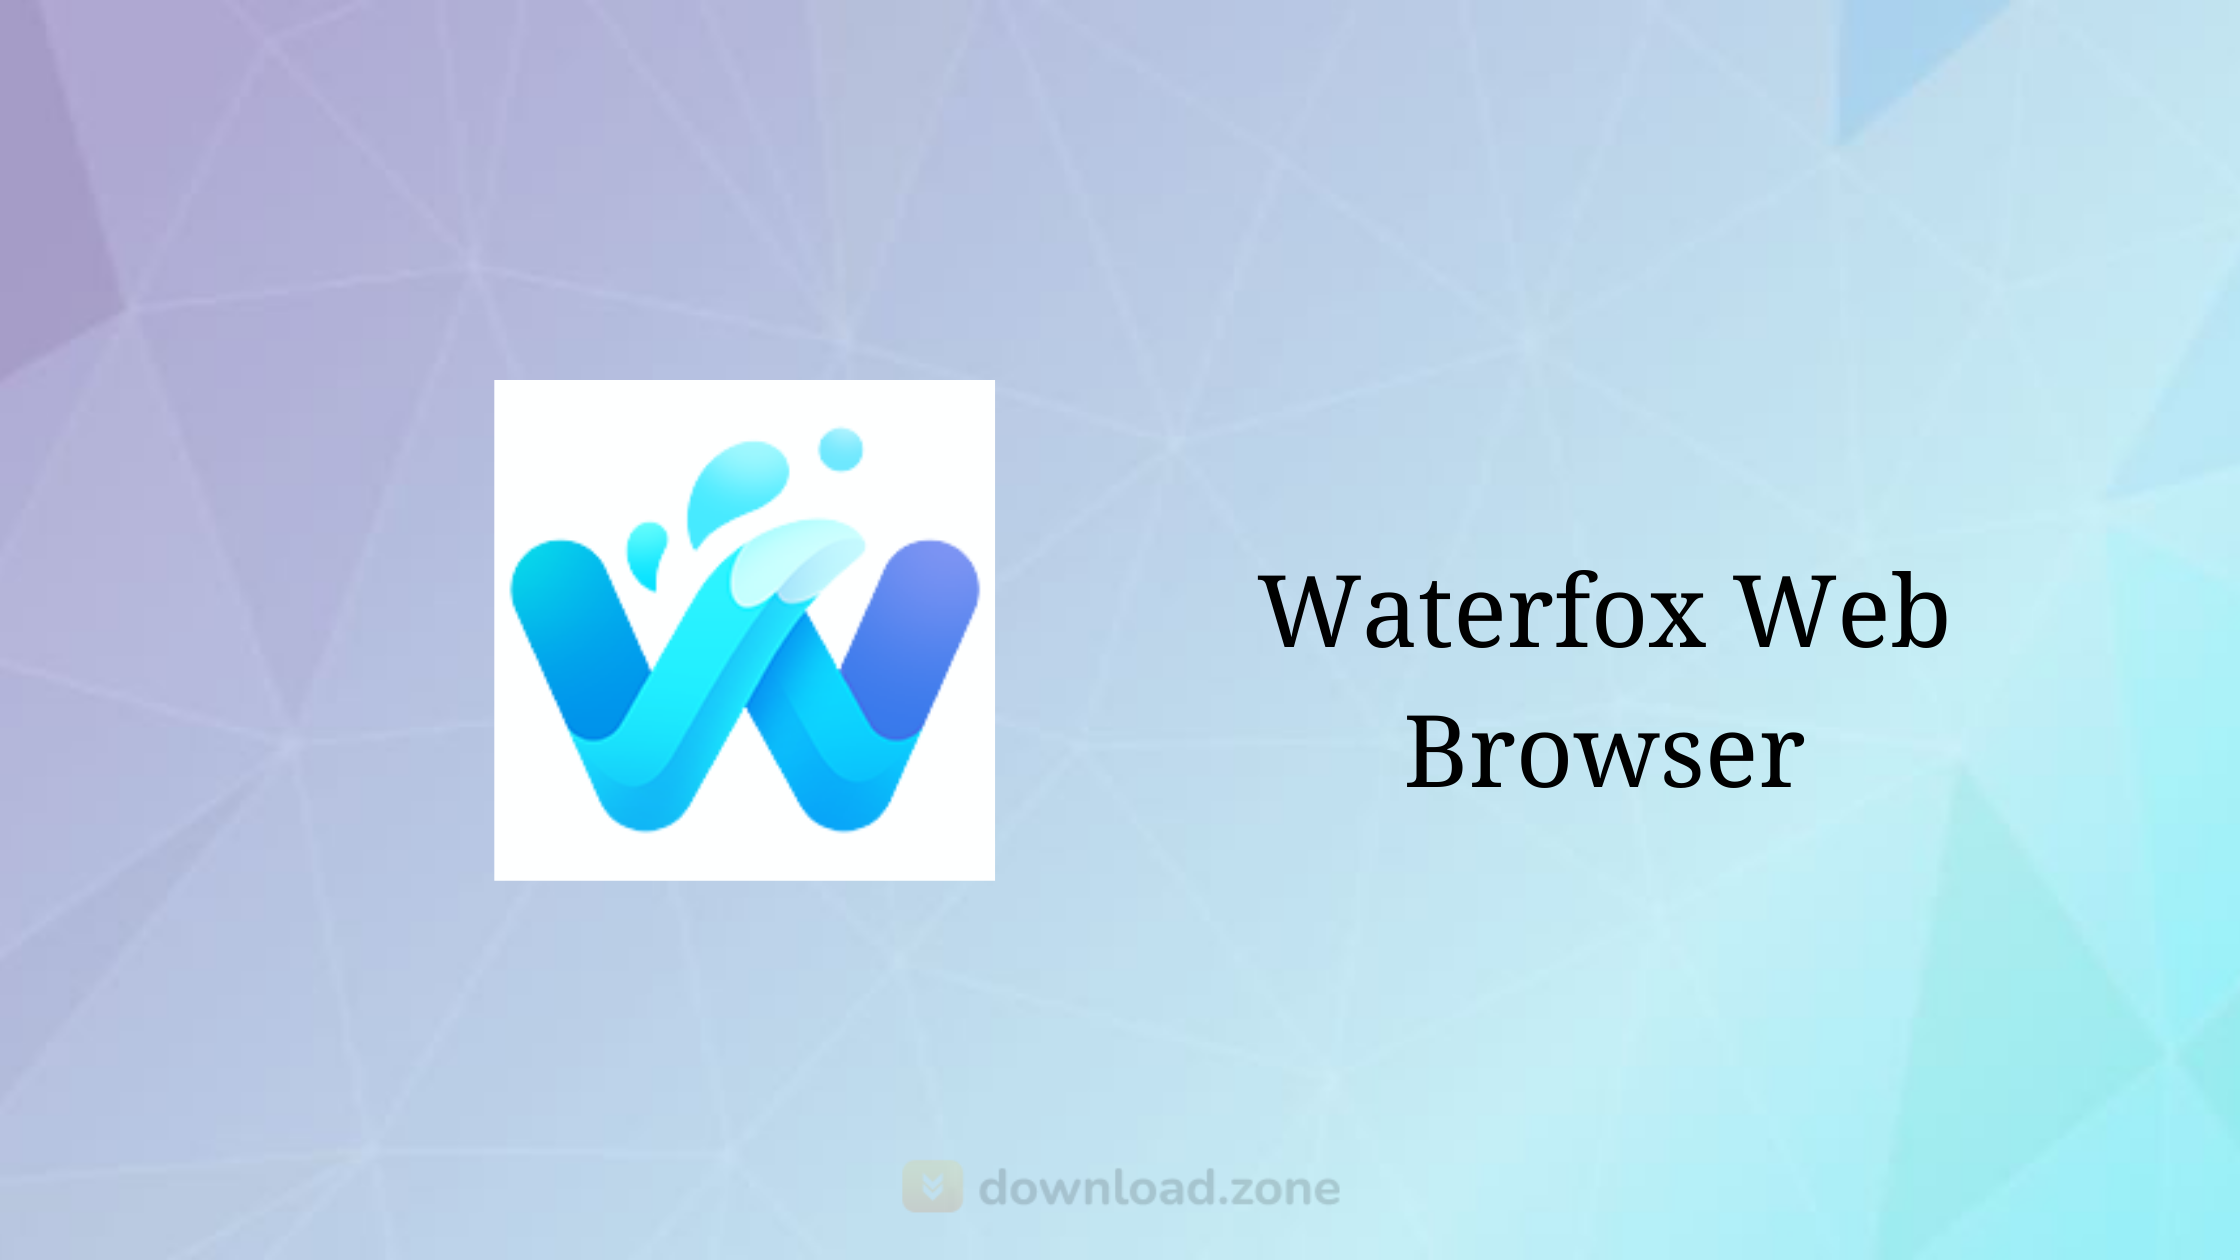 waterfox classic download